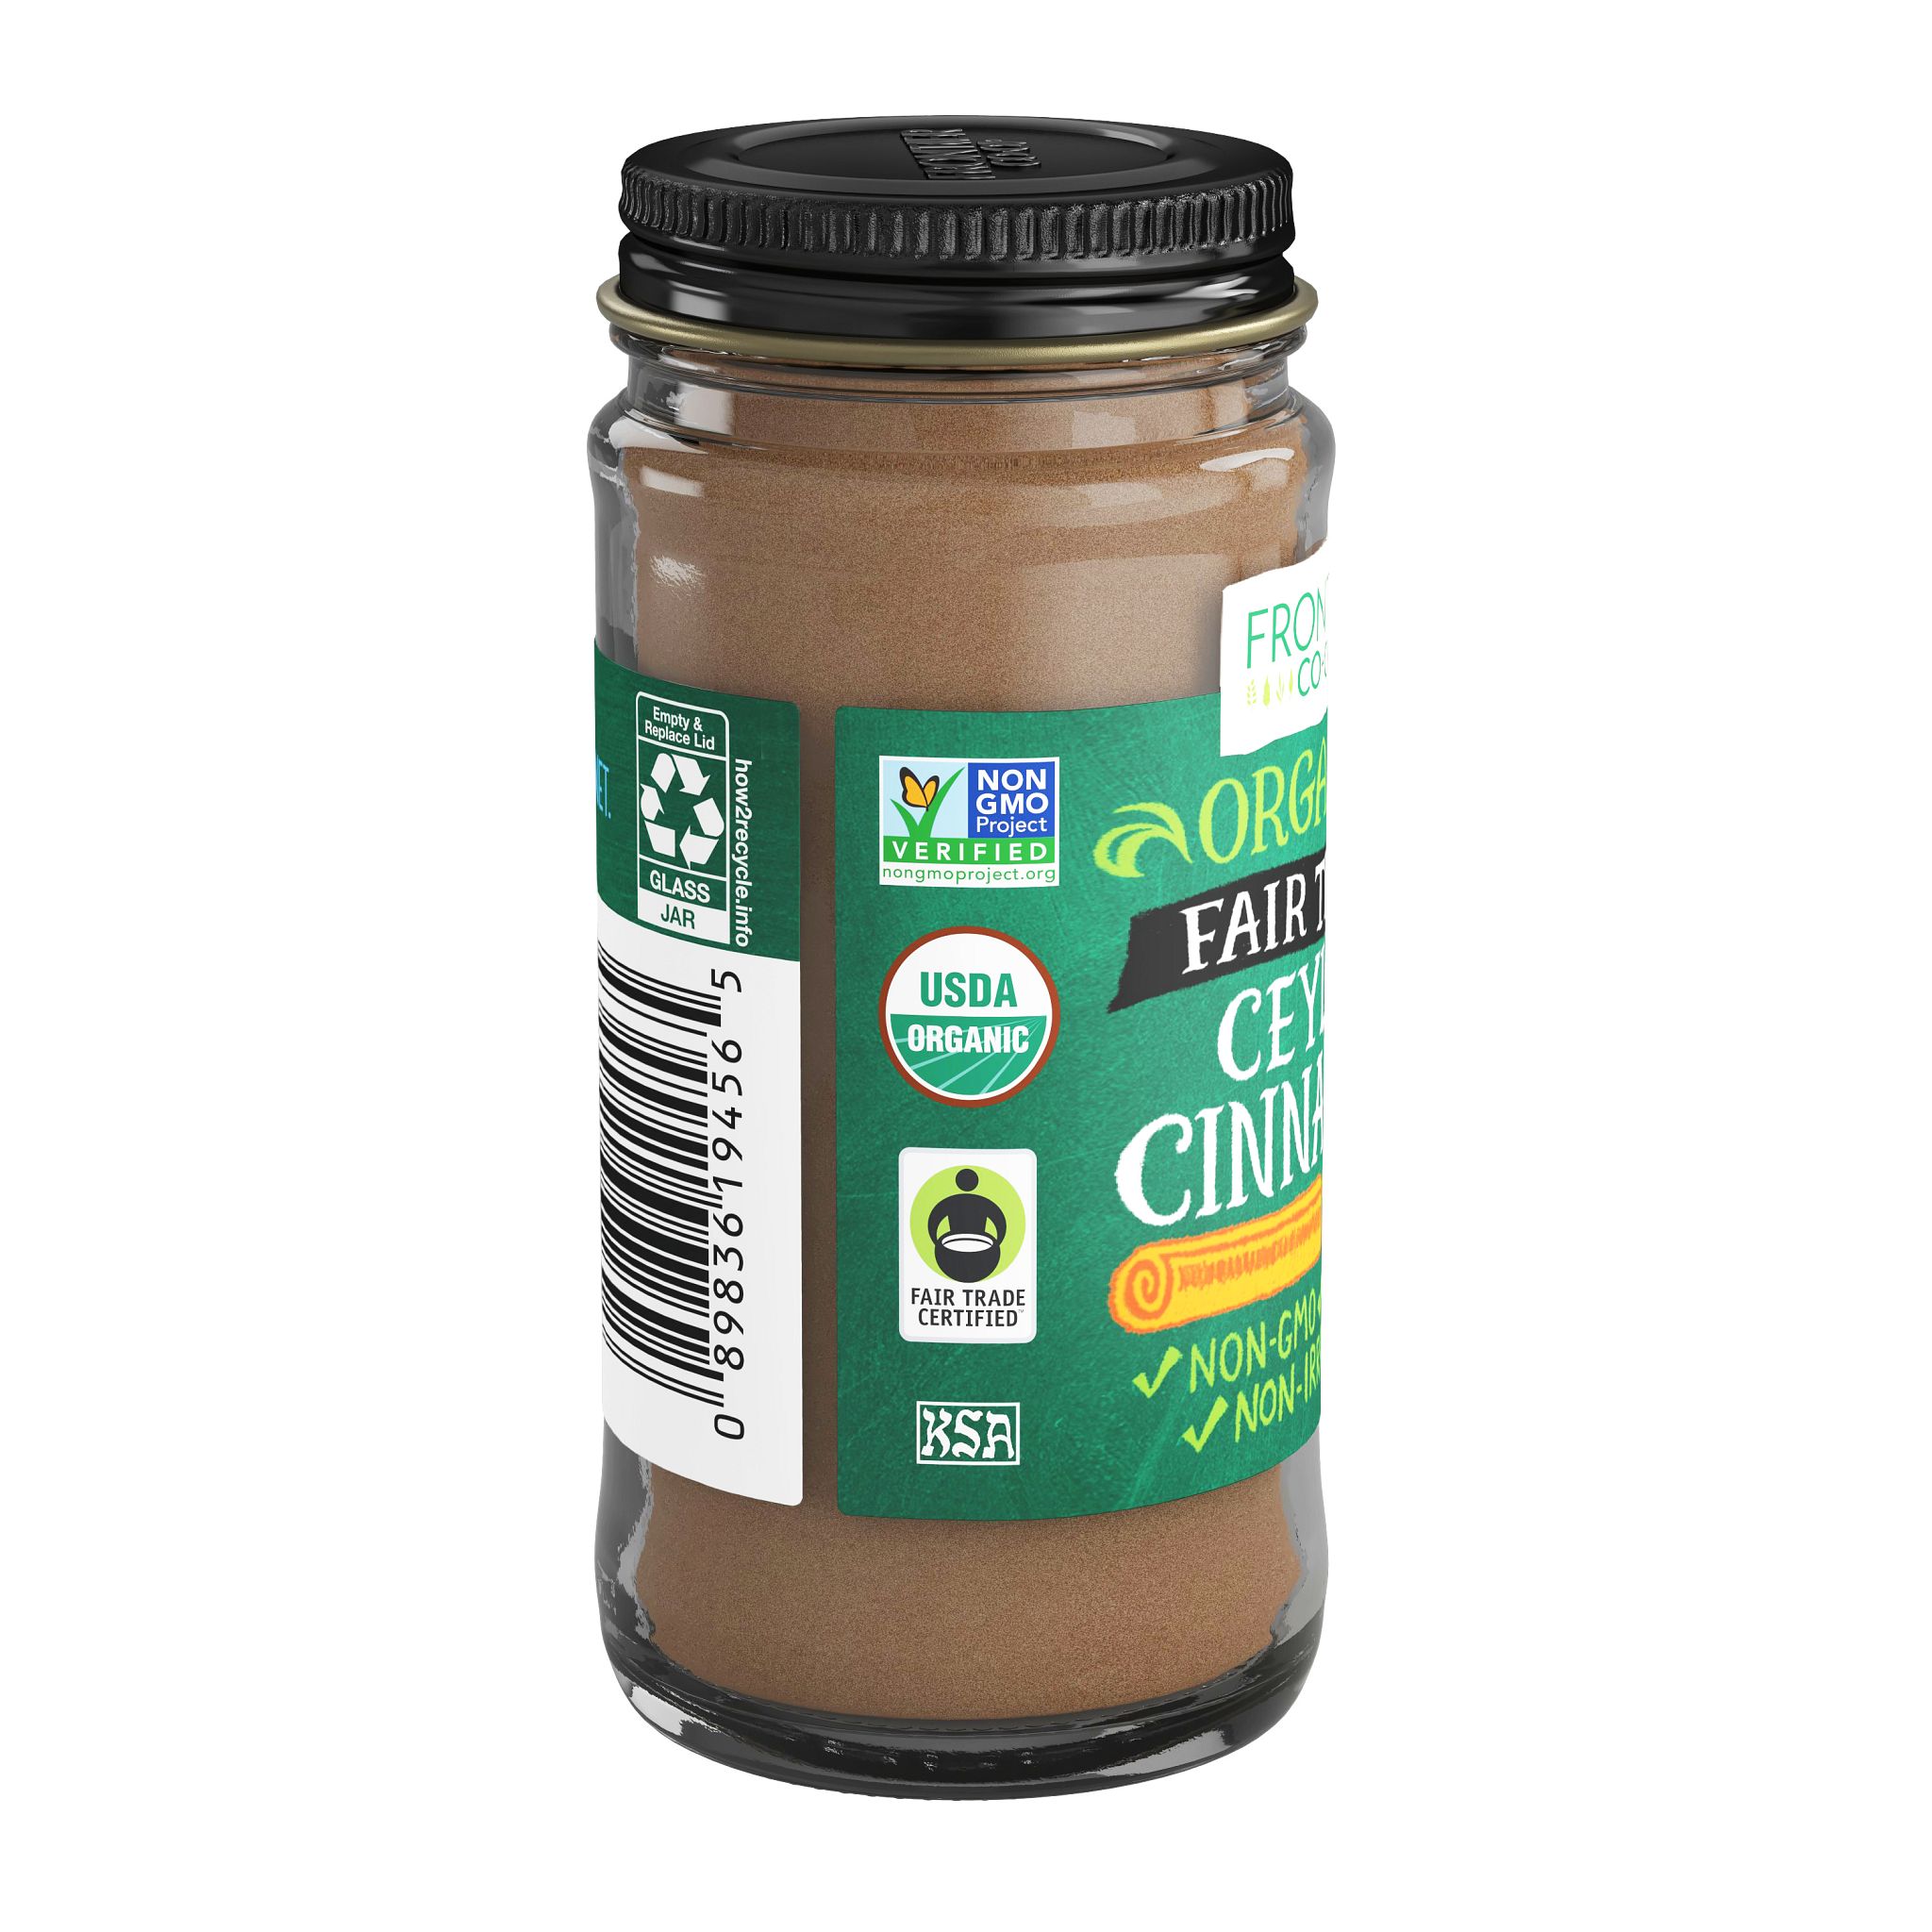 Frontier Co-op Fair Trade Organic Ceylon Cinnamon, 1.76 oz. - image 3 of 7